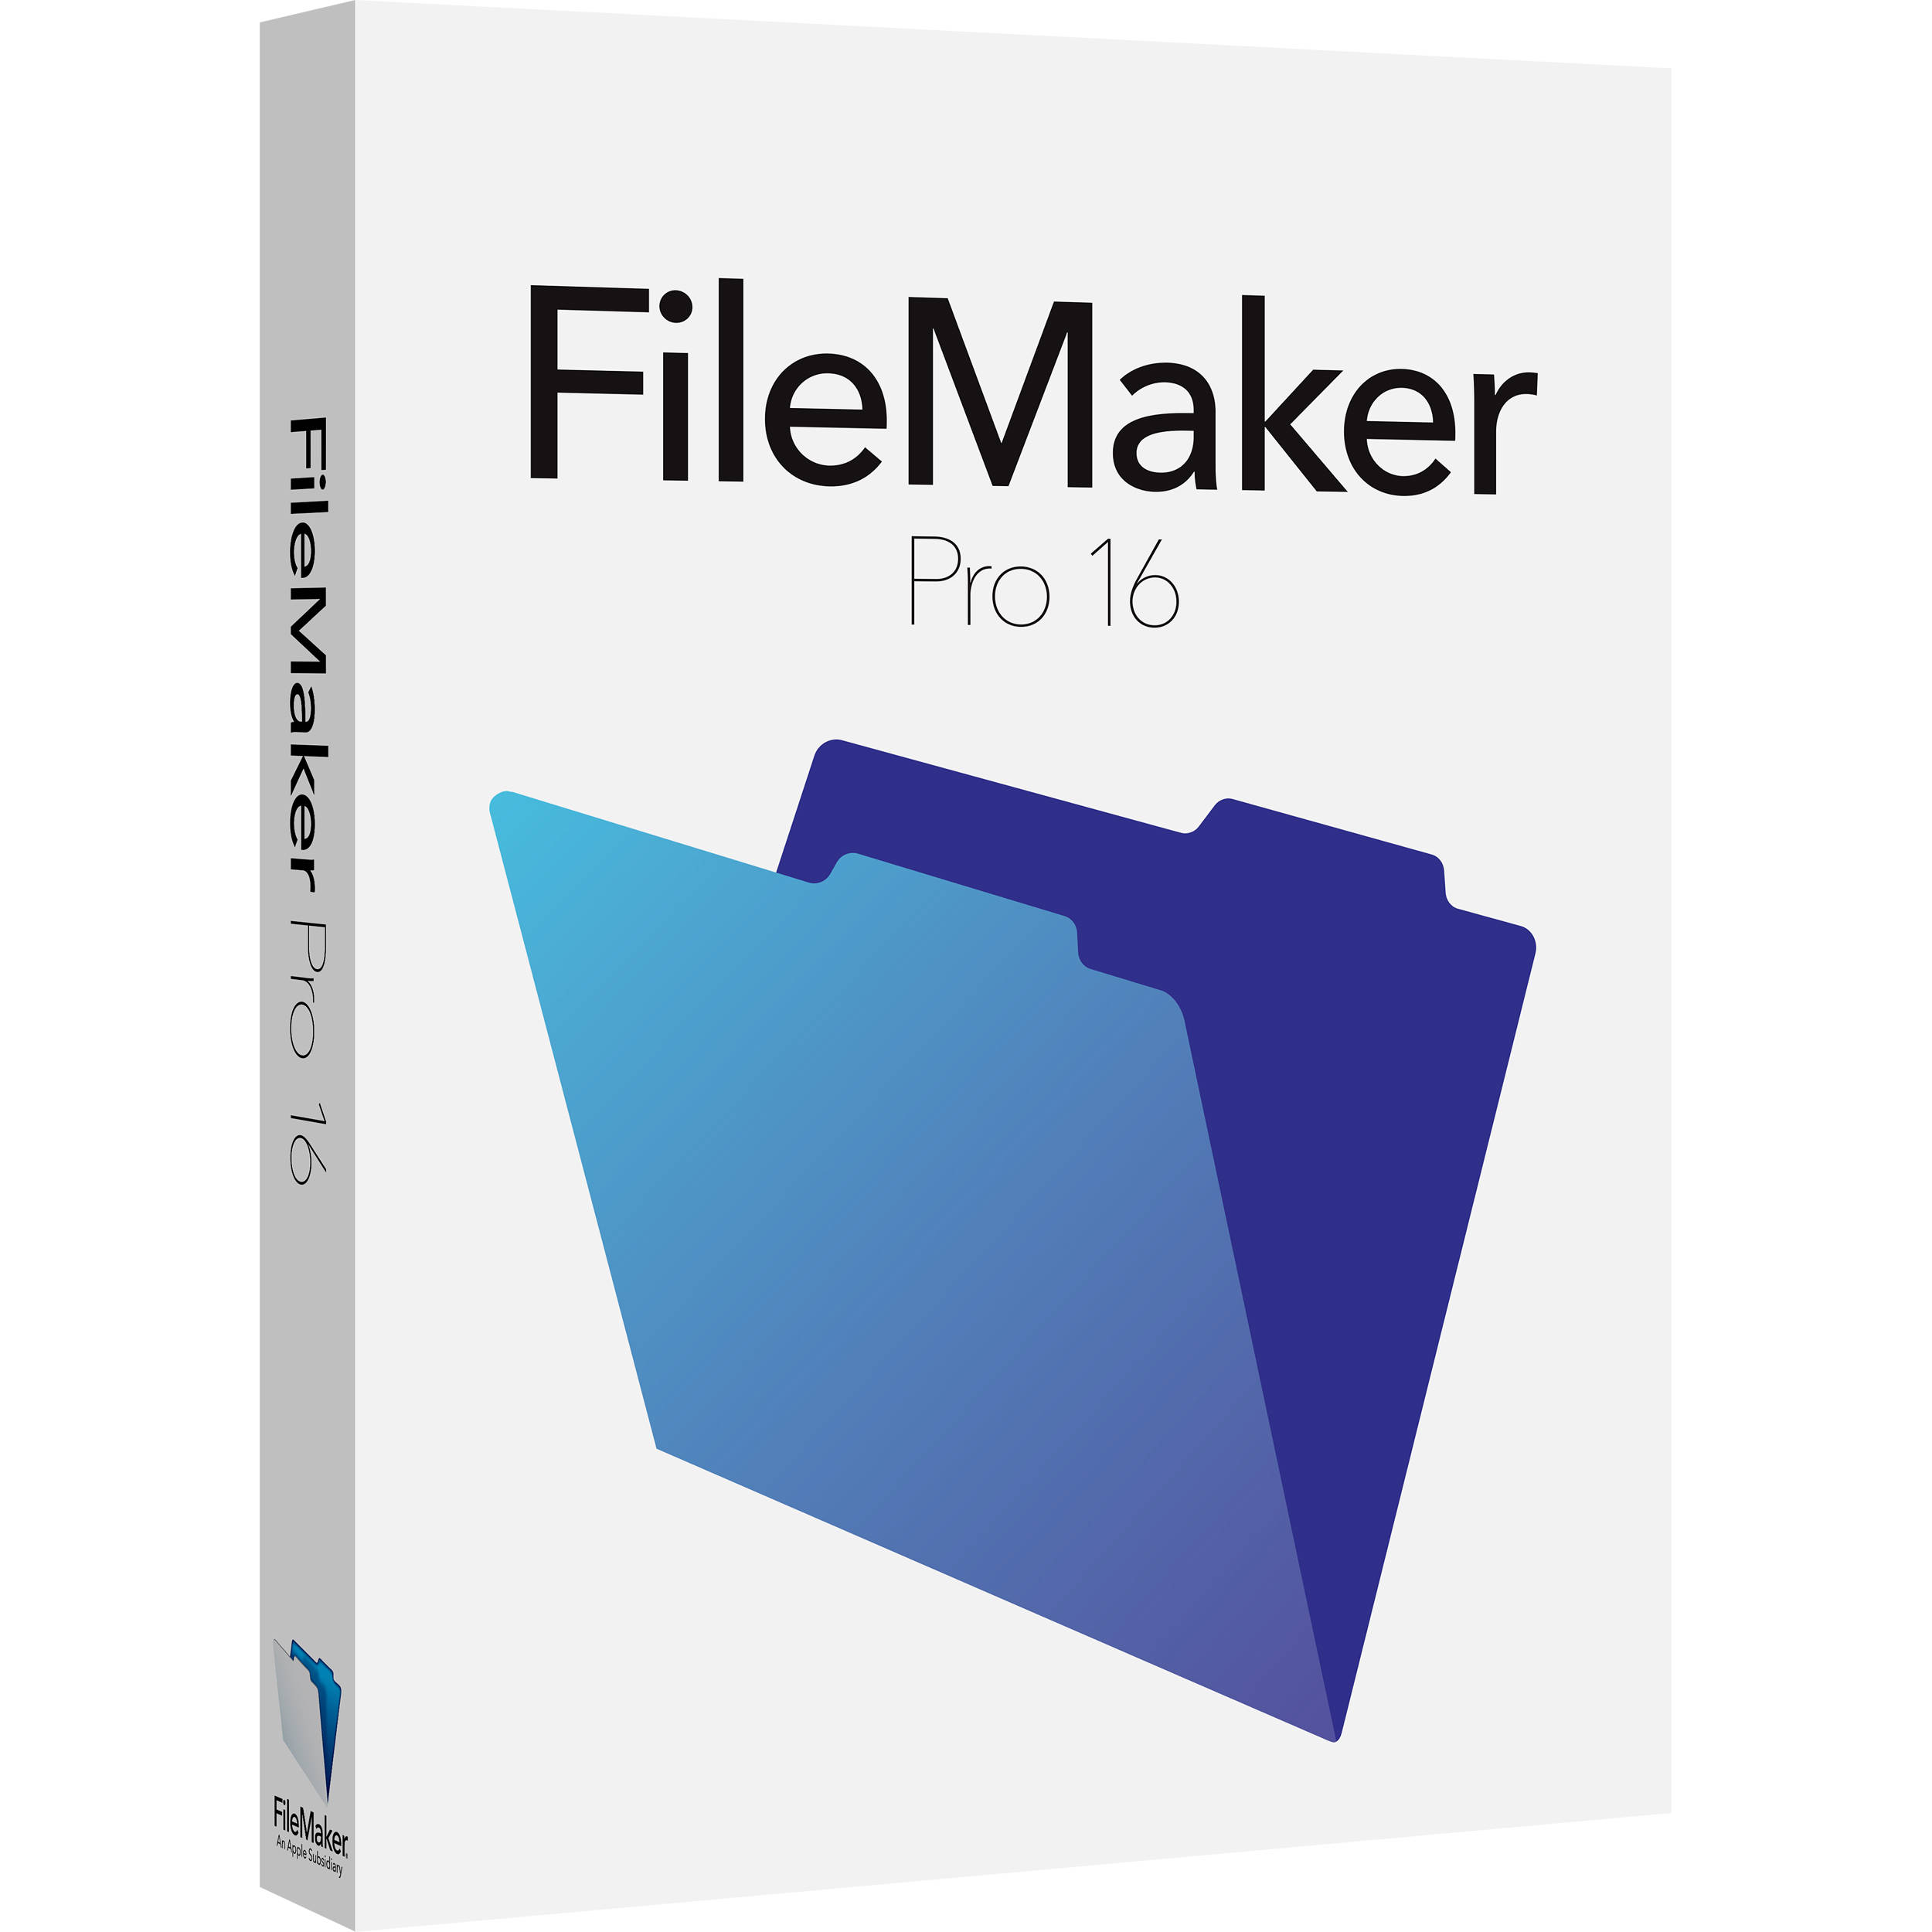 filemaker pro 15 download free full